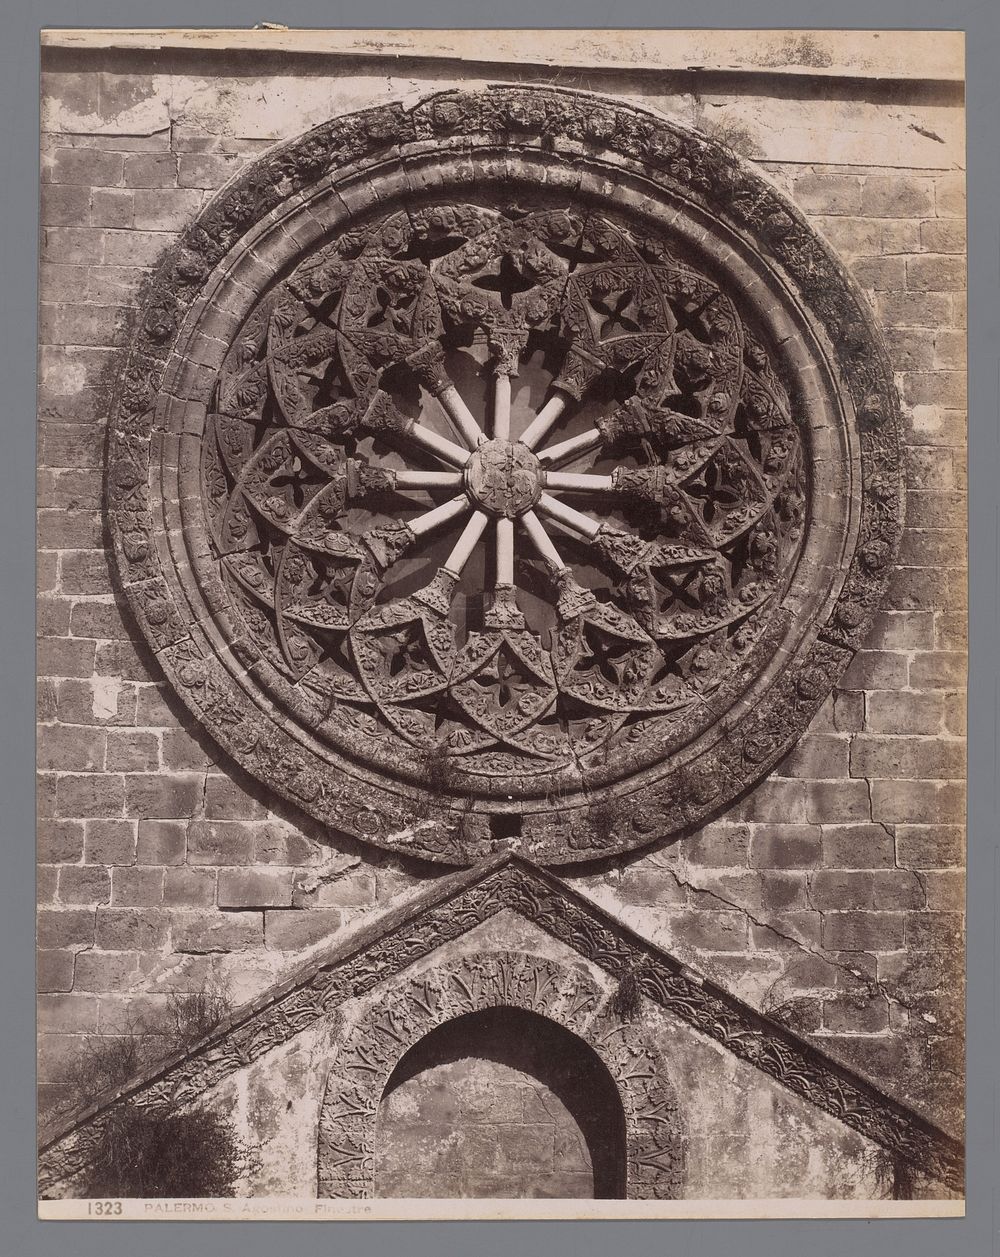 Roosvenster boven het voorportaal van Sant'Agostino te Palermo, Sicilië (1857 - 1914) by Giorgio Sommer